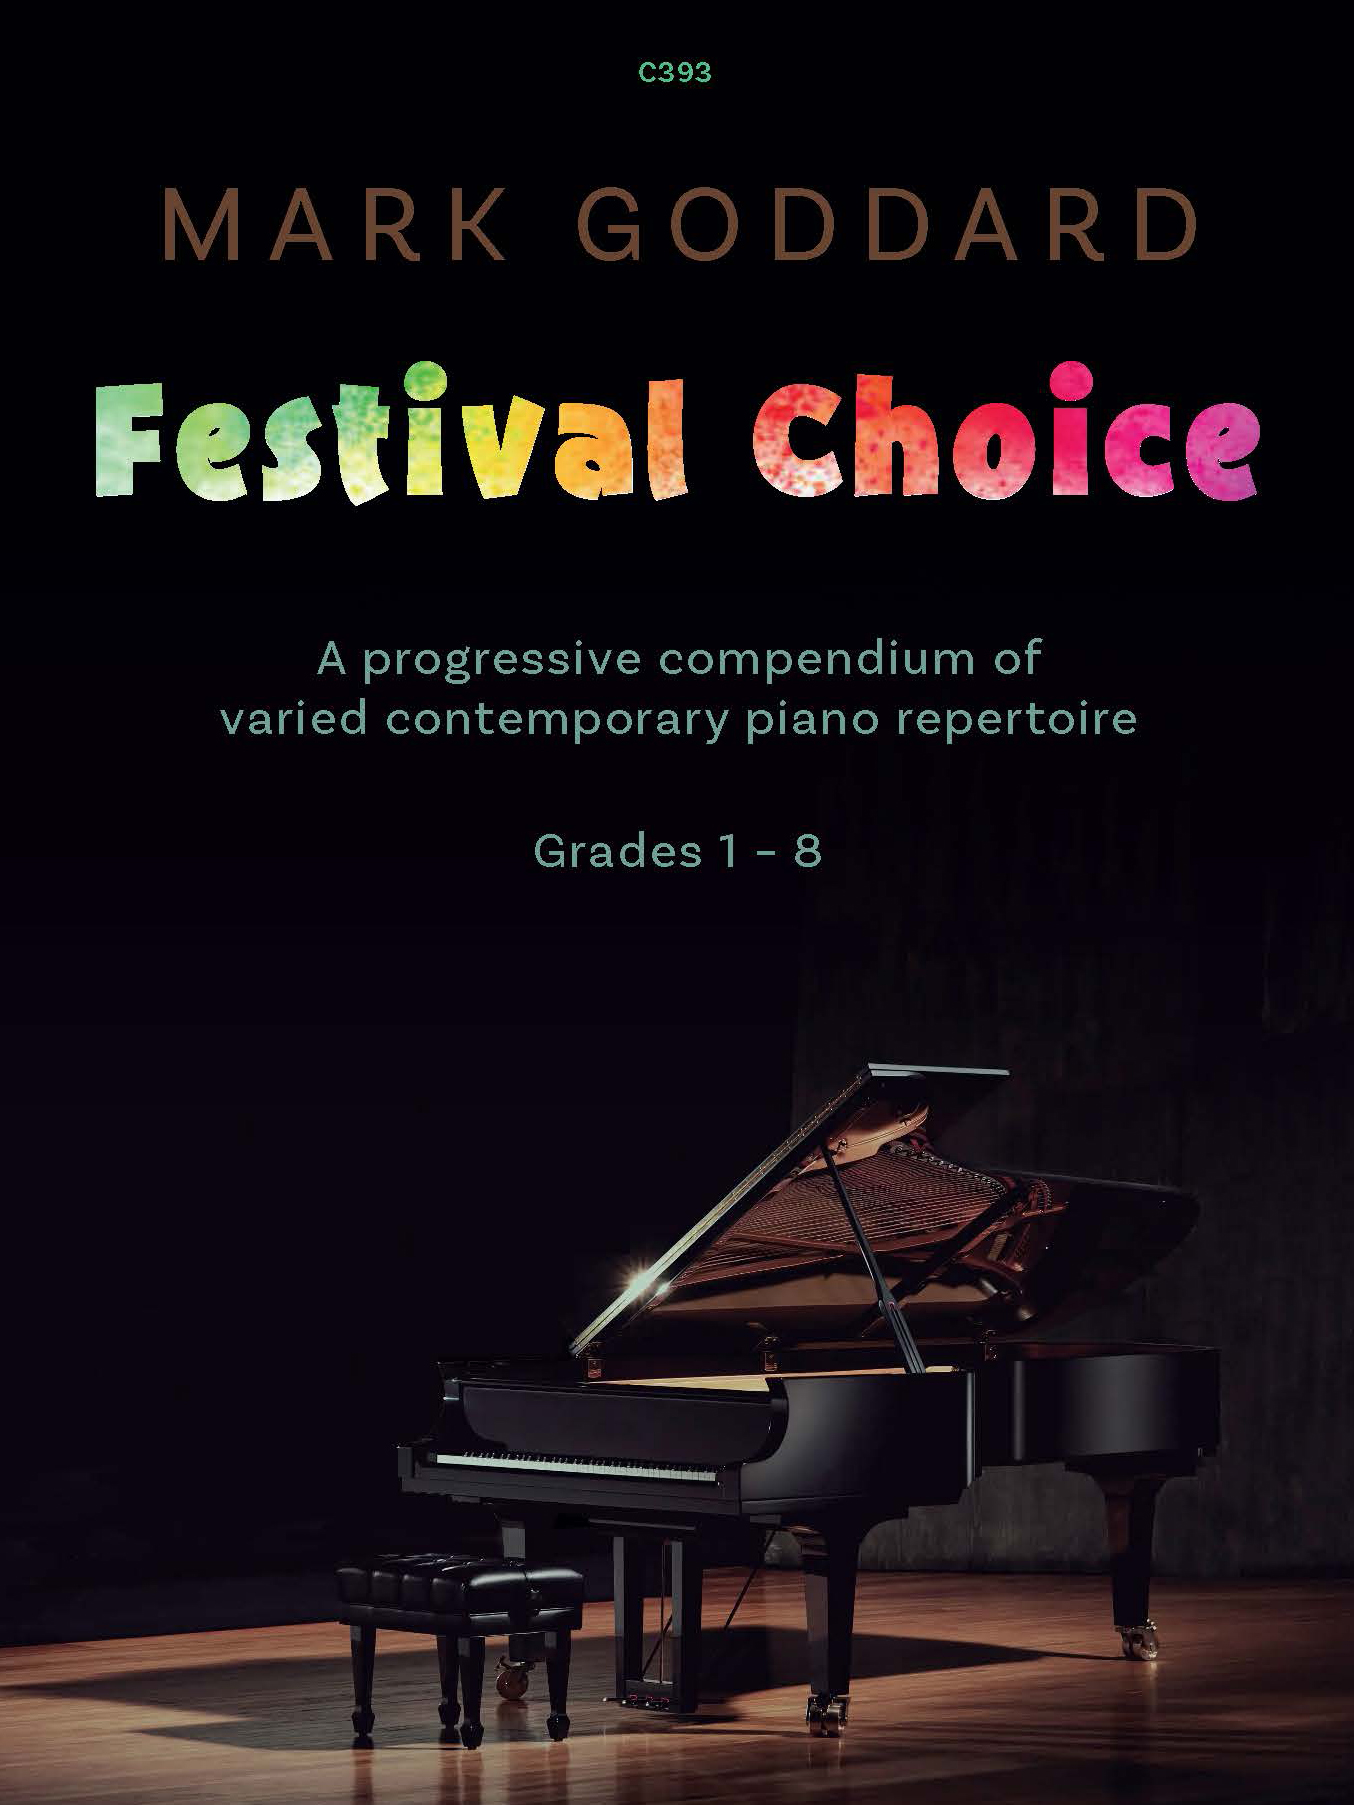 Goddard Festival Choice Piano Sheet Music Songbook